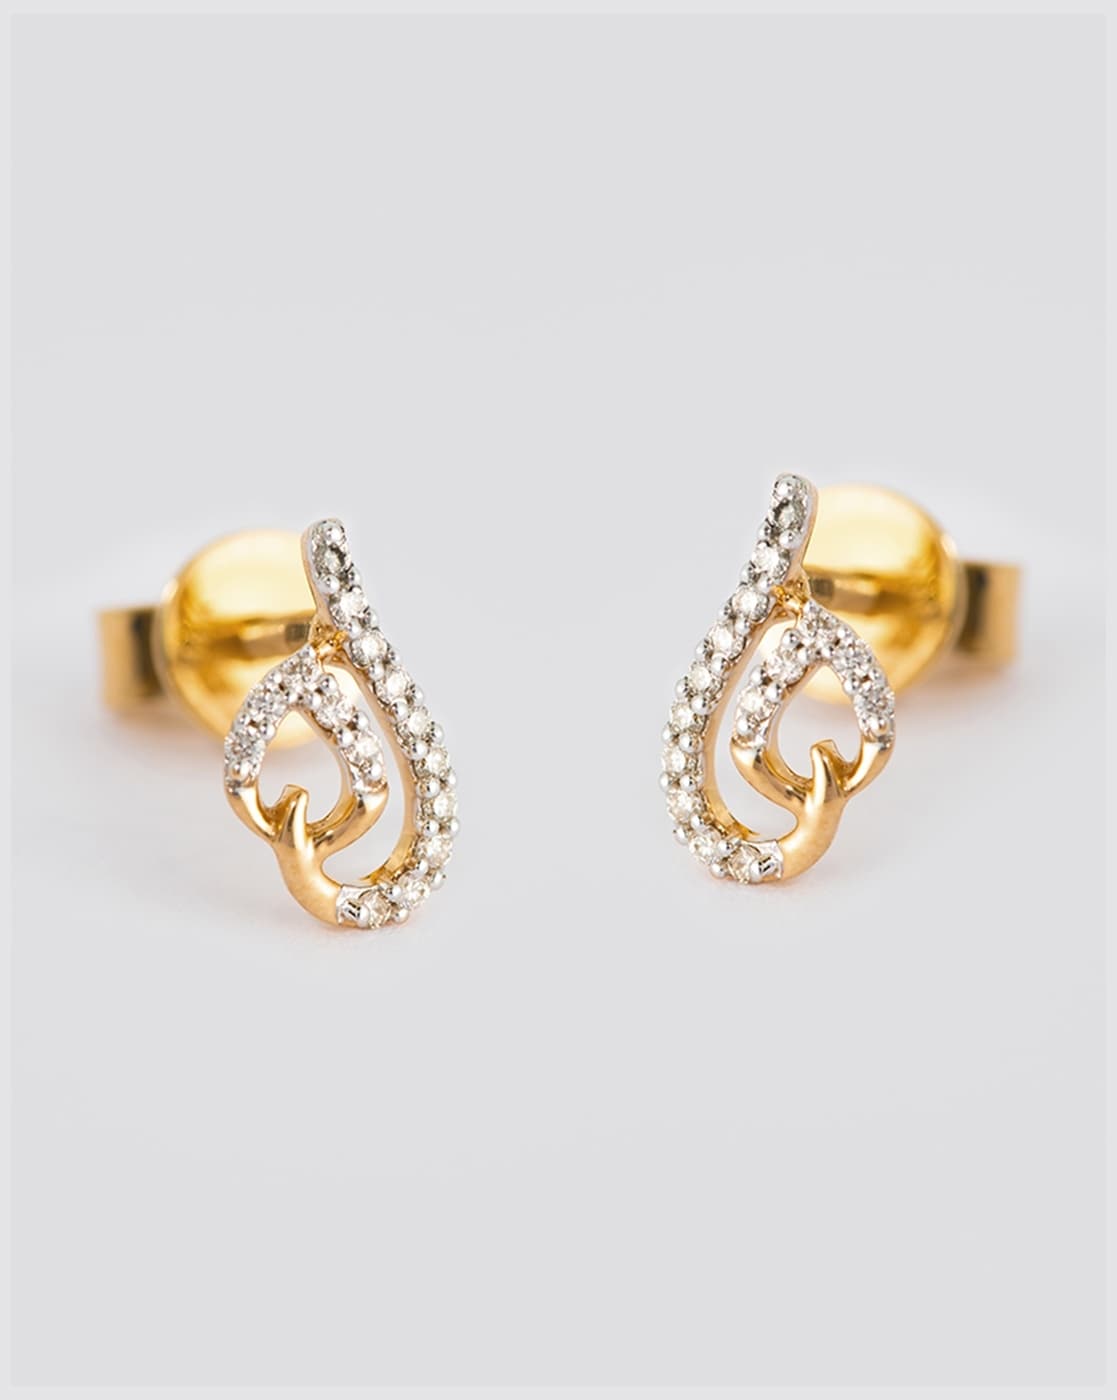 Stone Studded Earrings : JTS1131